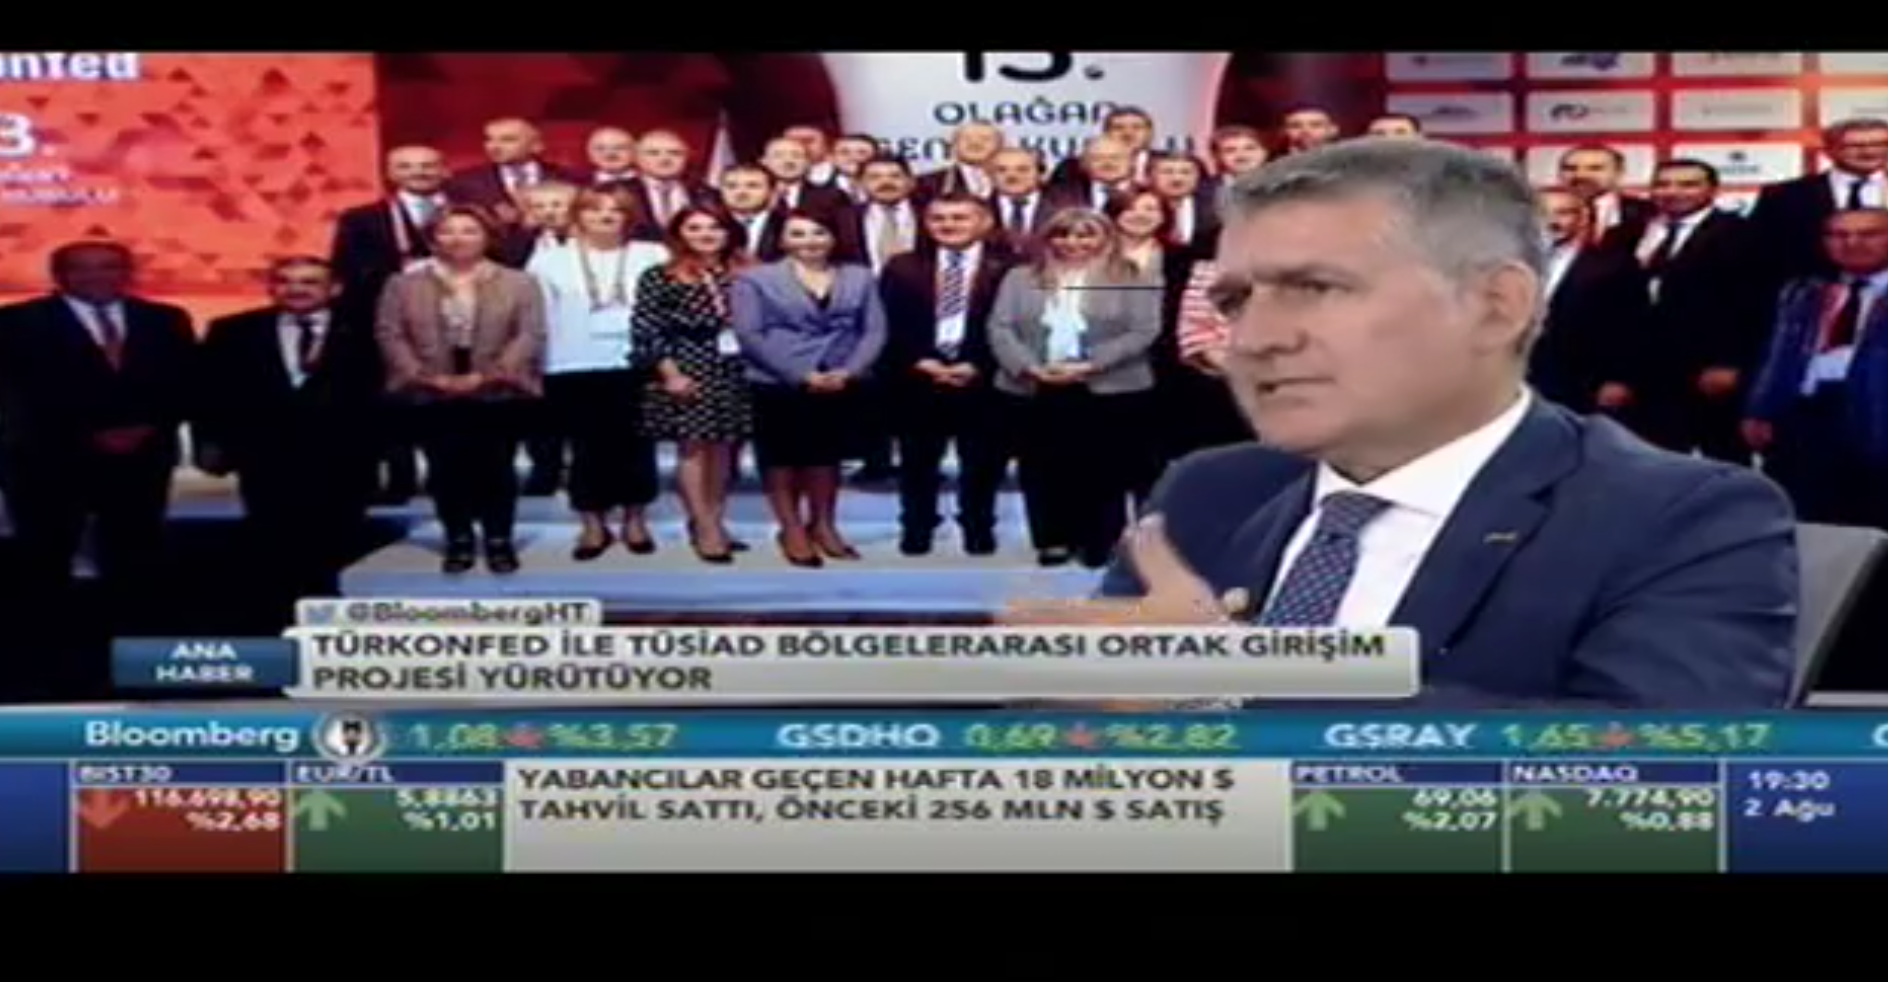 TÜRKONFED Başkanı Orhan Turan - Bloomberg HT Ana Haber / 2 Ağustos 2018